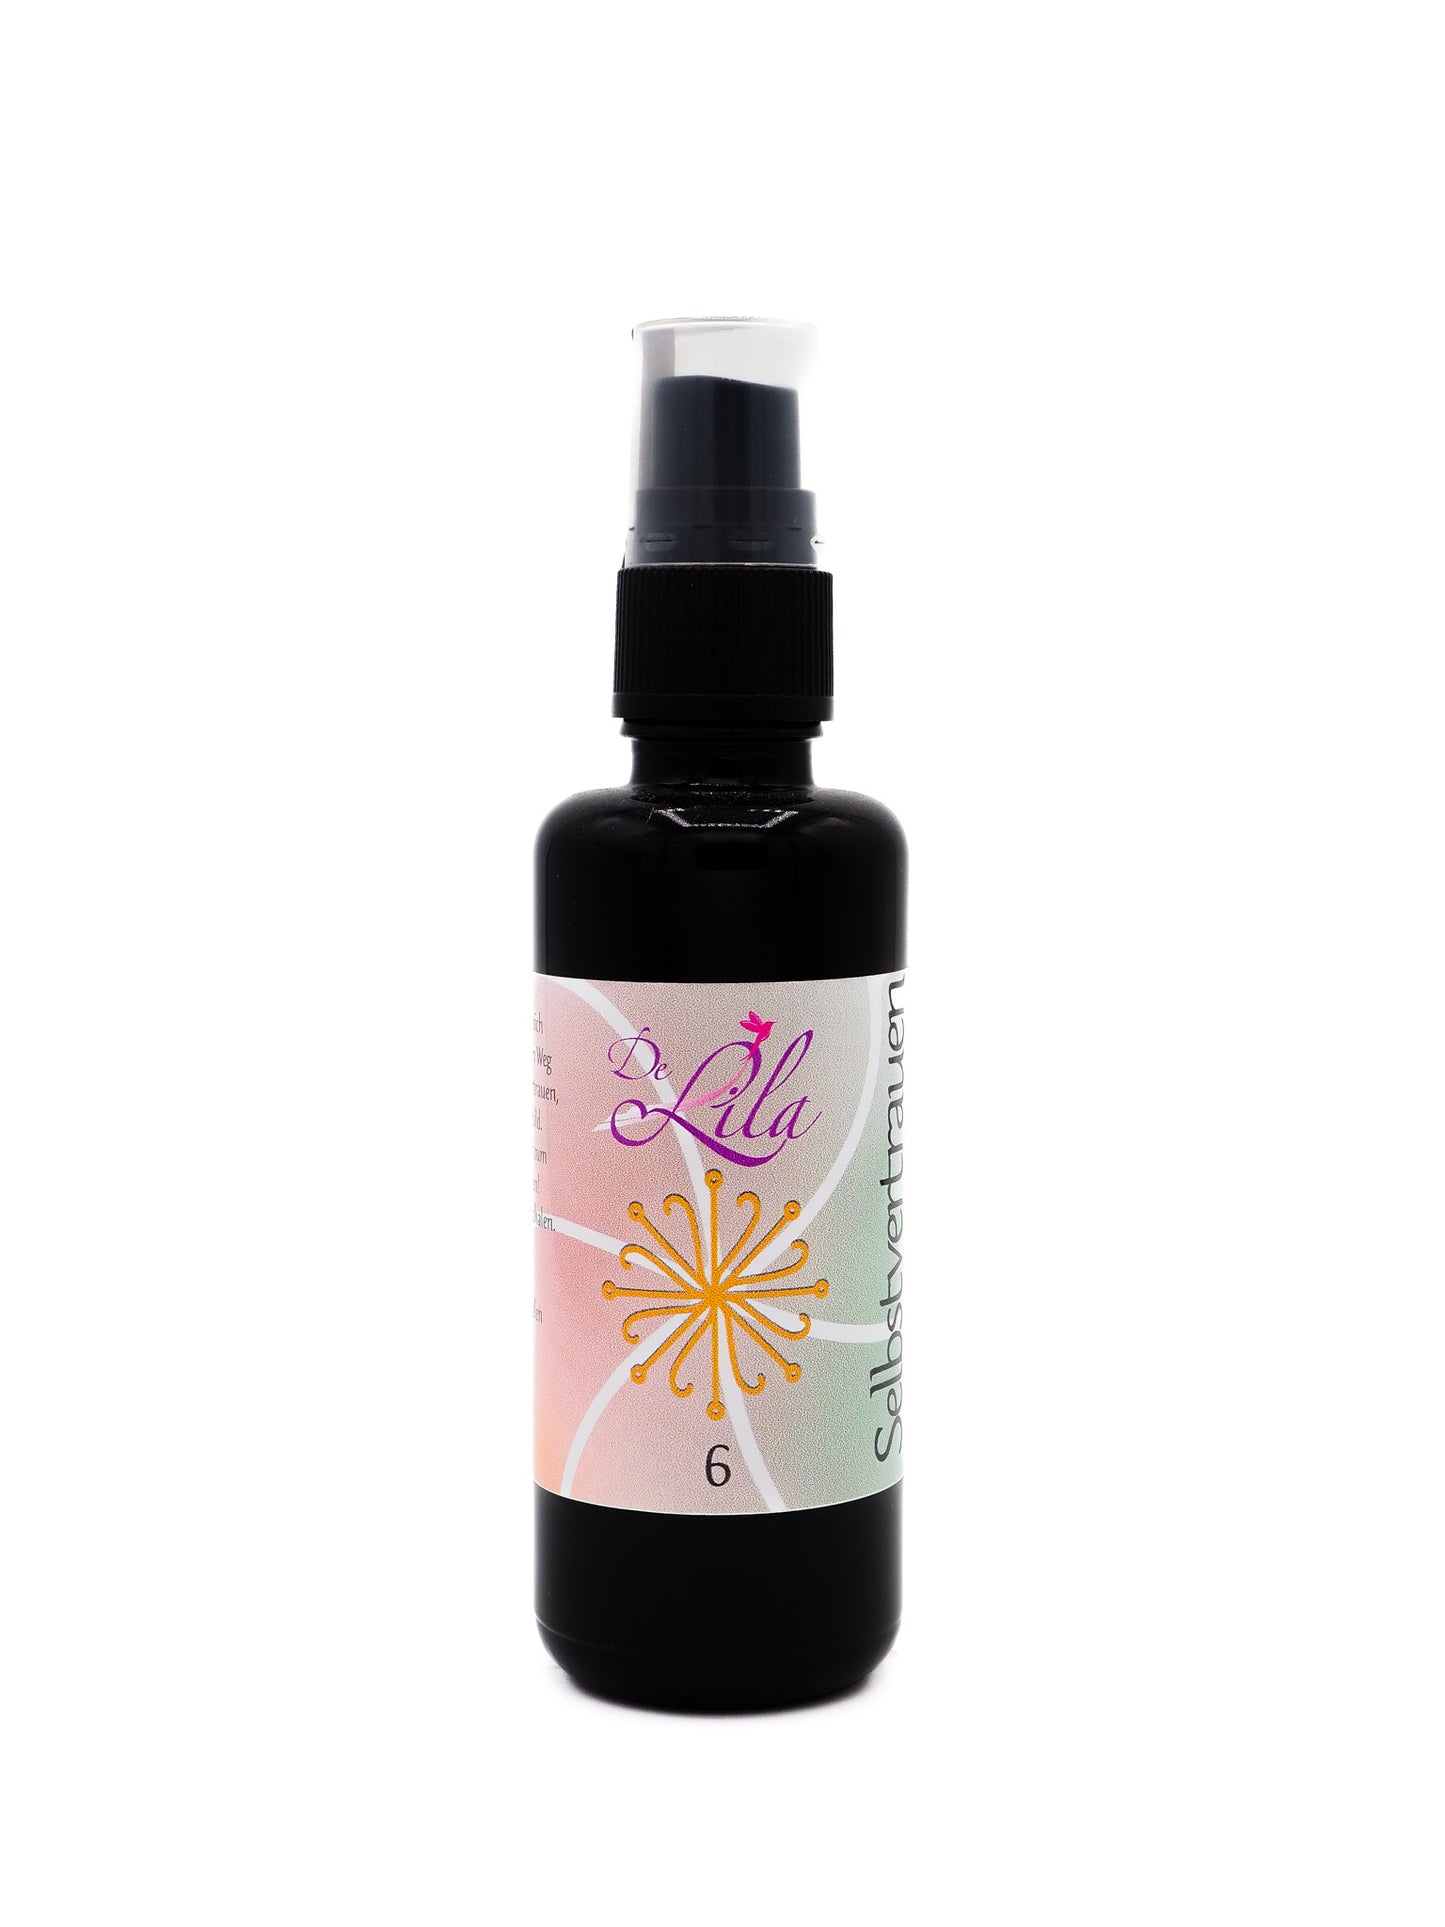 DeLila® Fragrance & Aura Spray - 6 - Self-Confidence